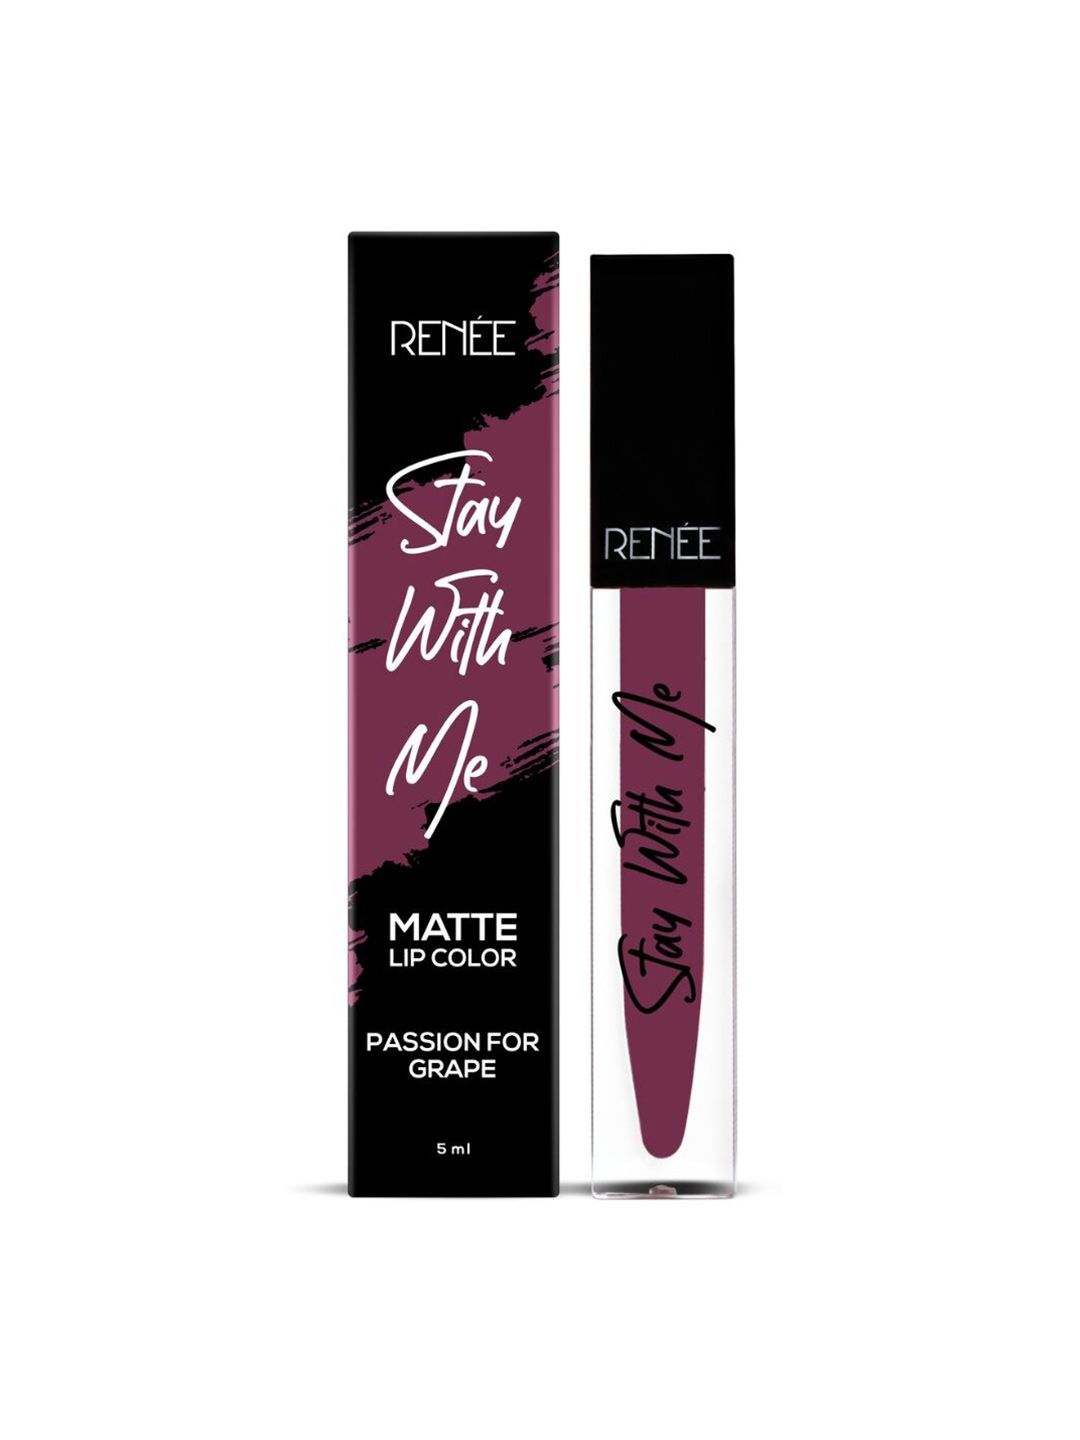 Renee Purple Lipstick Stay With Me Matte Lip Color - Passion For Grape, 5ml Price in India